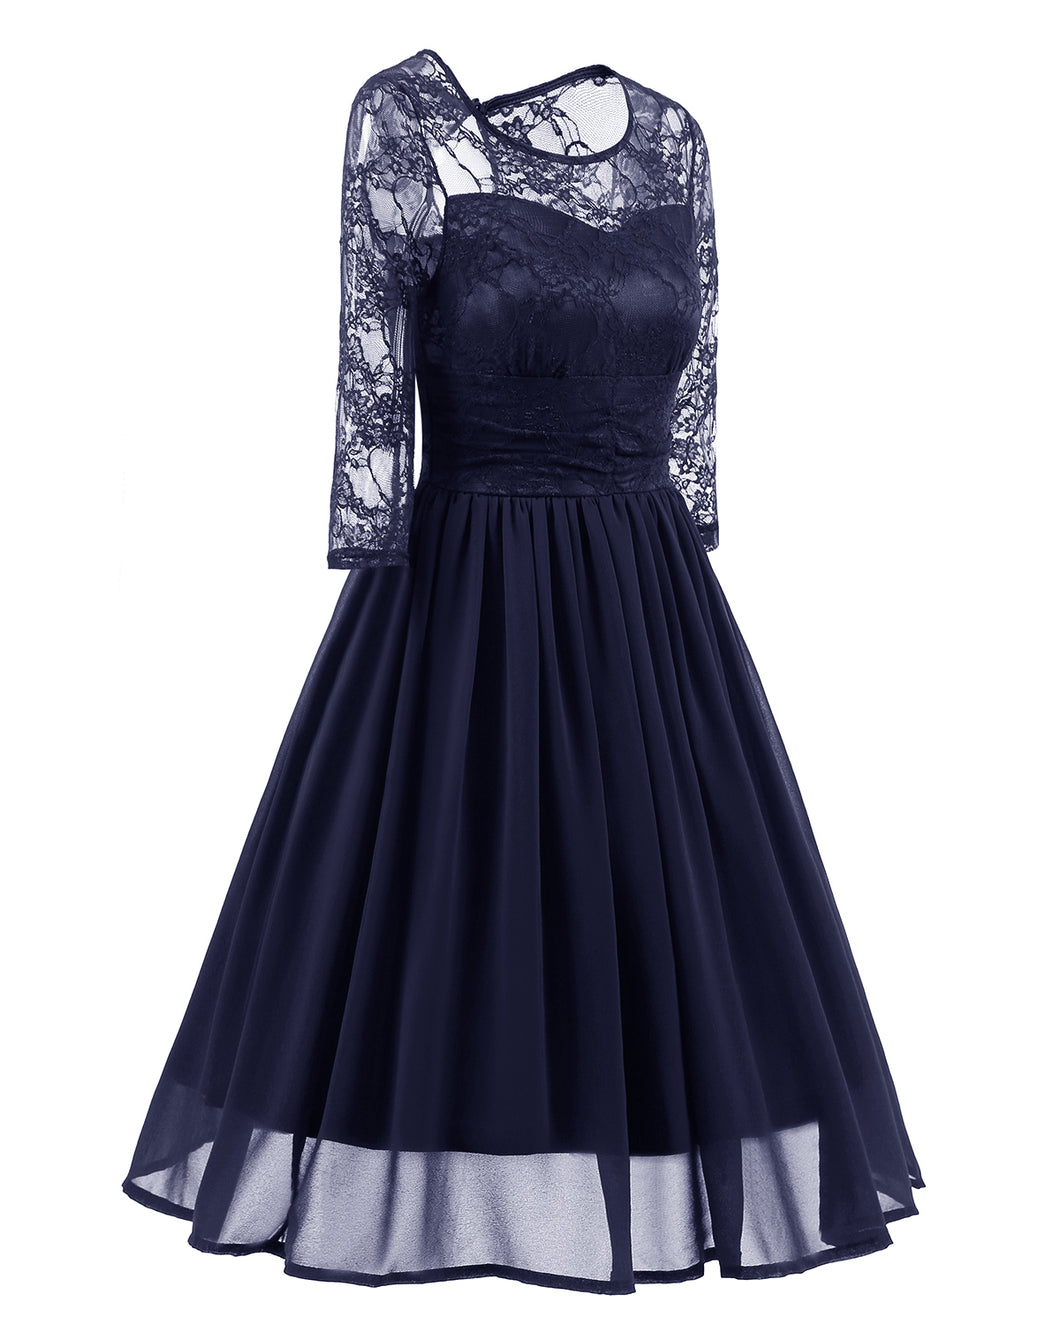 classy navy blue dress